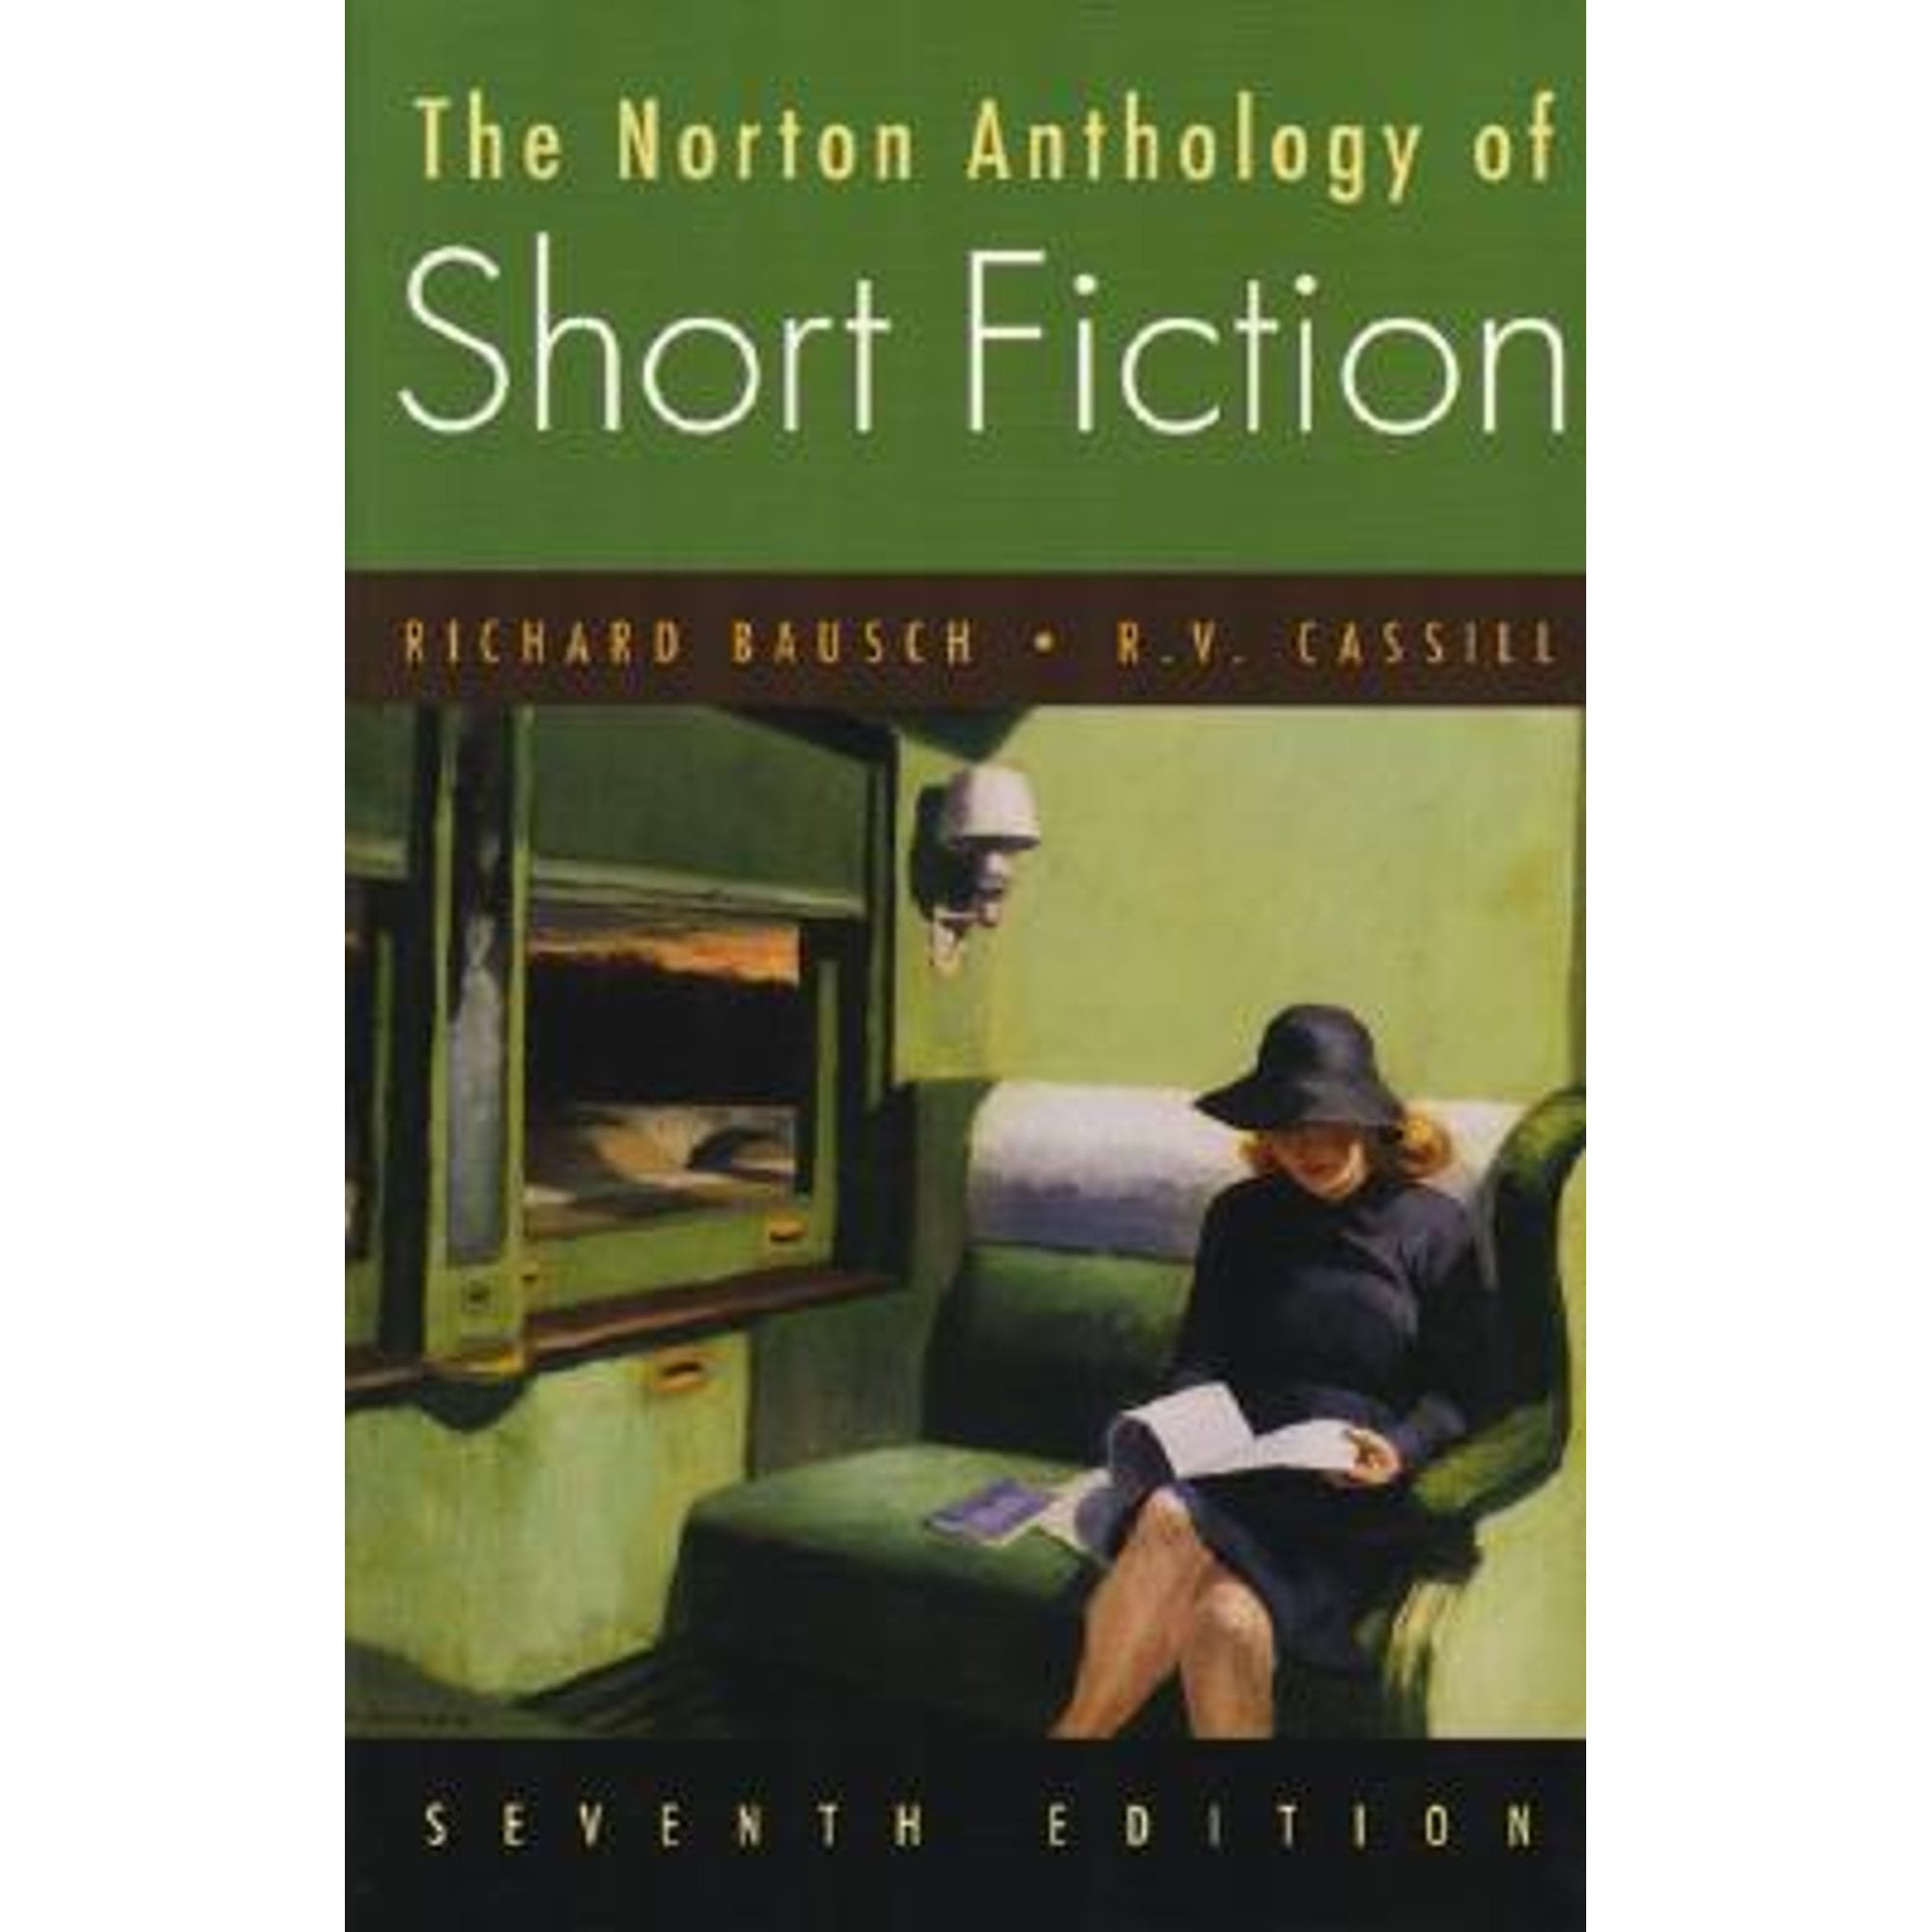 Short fiction